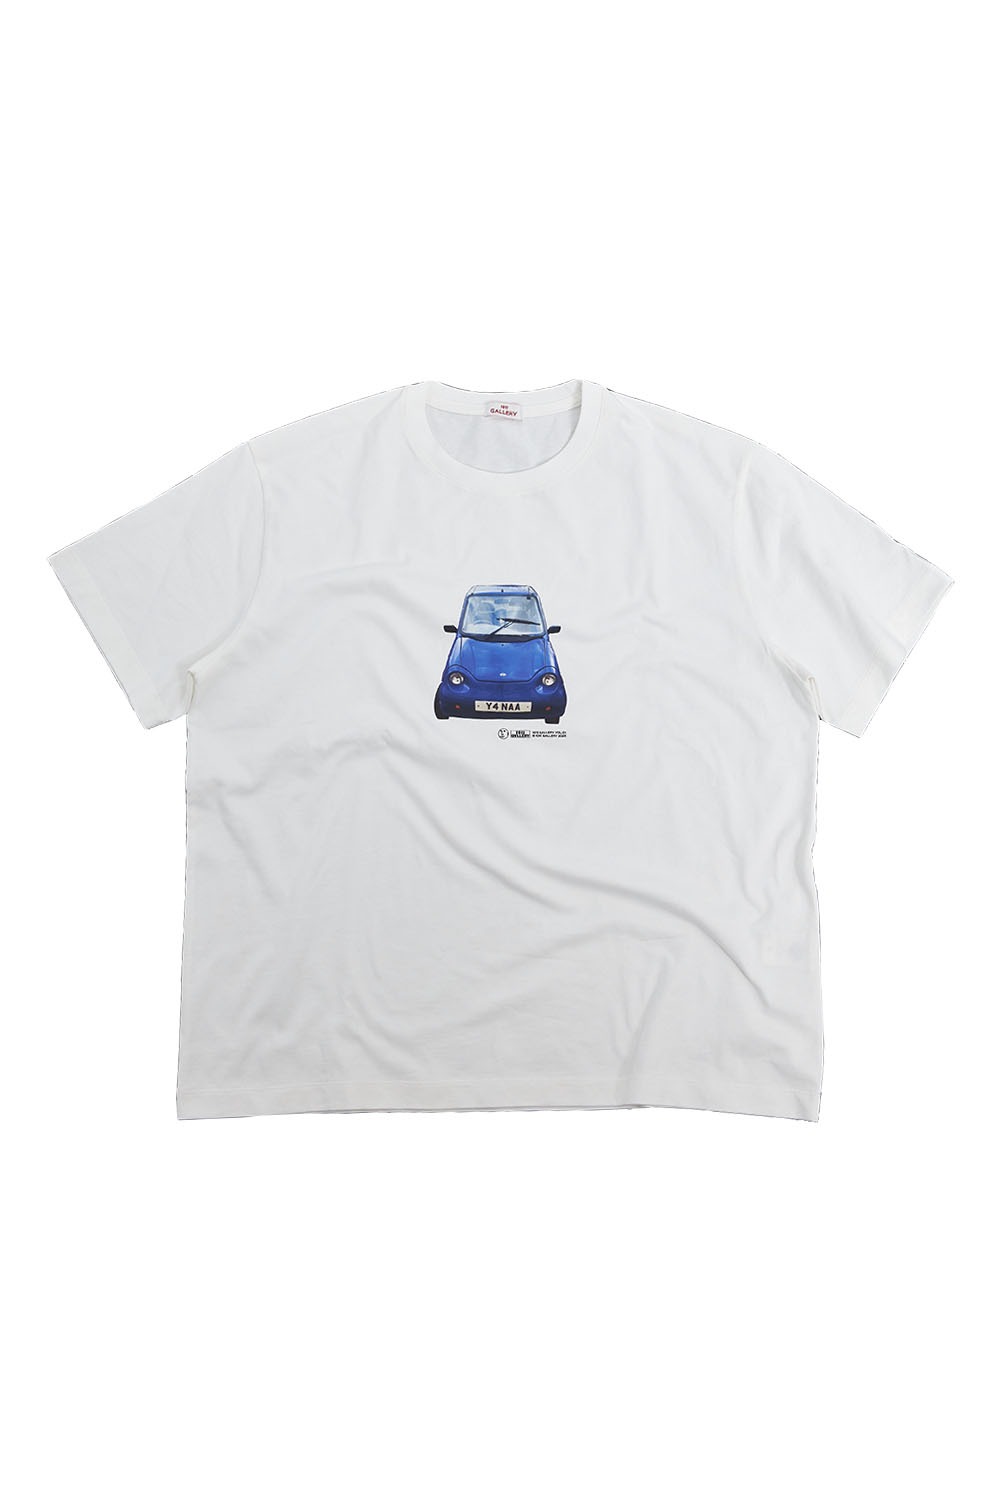 Gallery Blue Car T-shirt - White